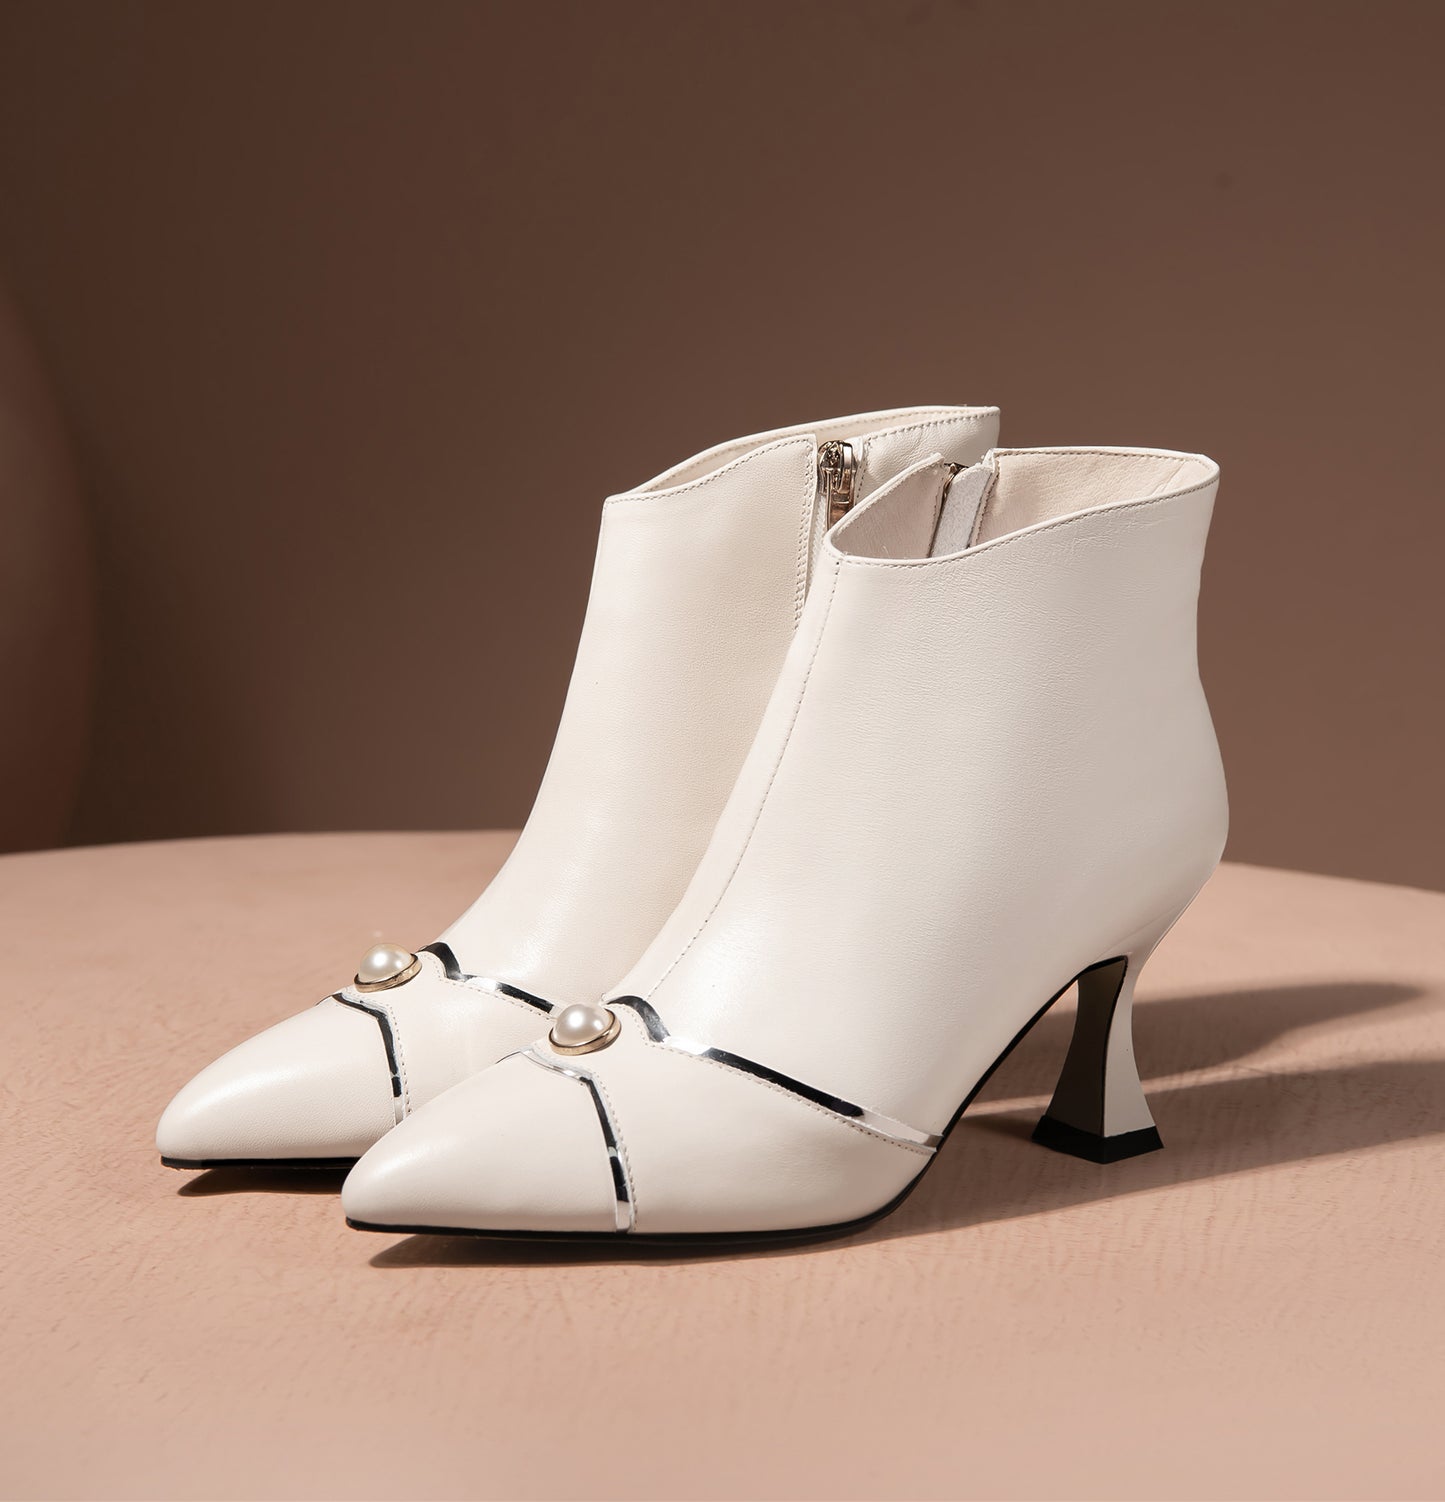 TinaCus Handmade Women's Genuine Leather Side Zip Up Spool Heel Pointed Toe Elegant Ankle Boots